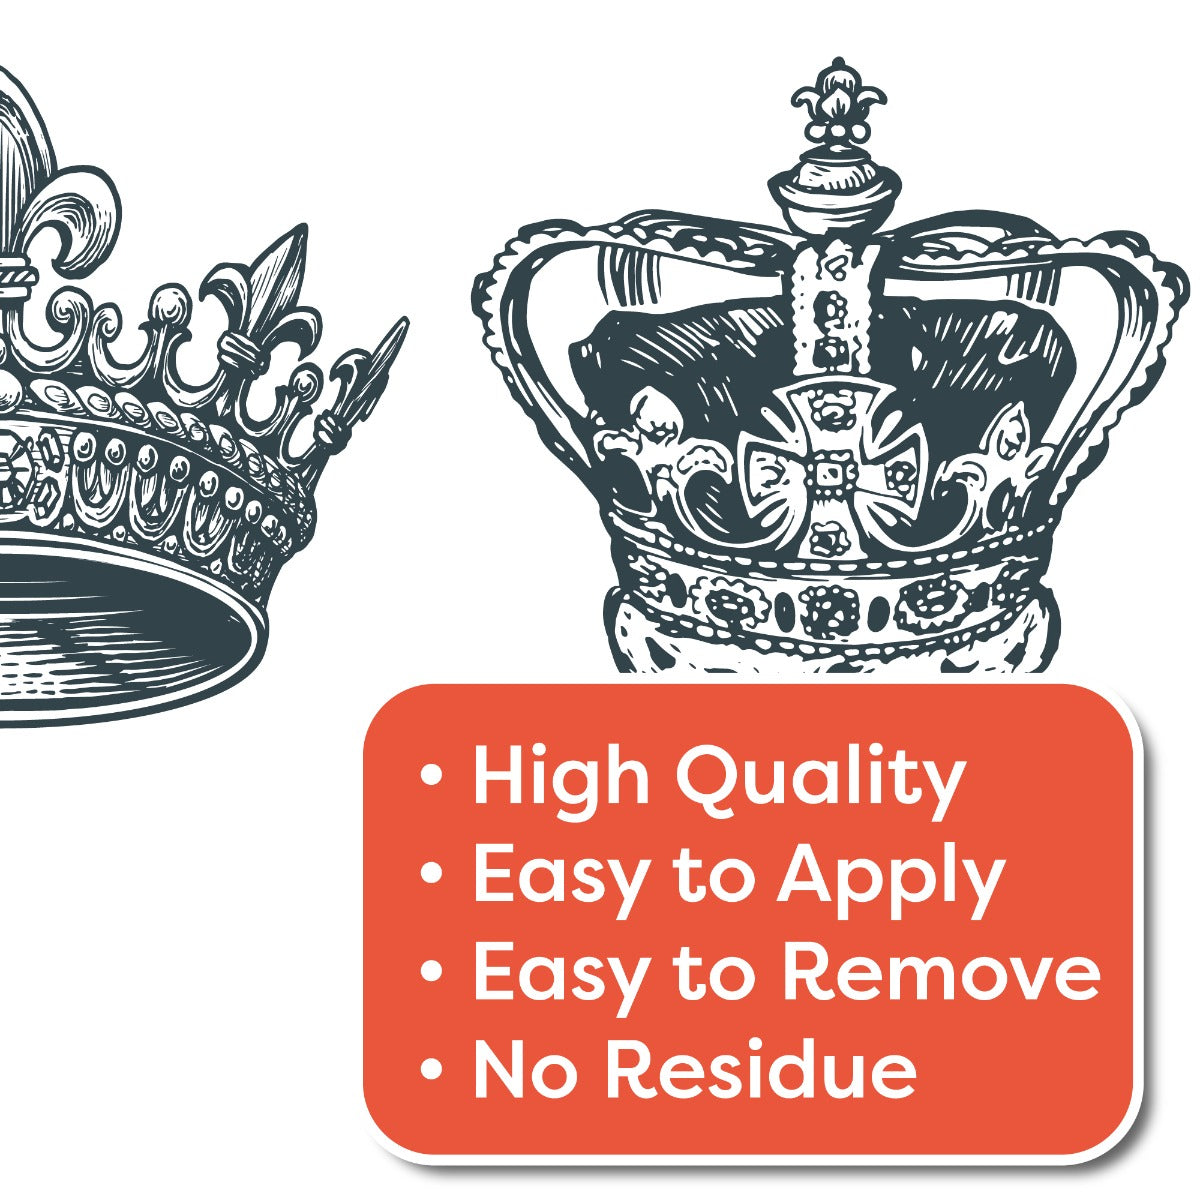 King Charles Coronation Royal Crown Wall Sticker Set